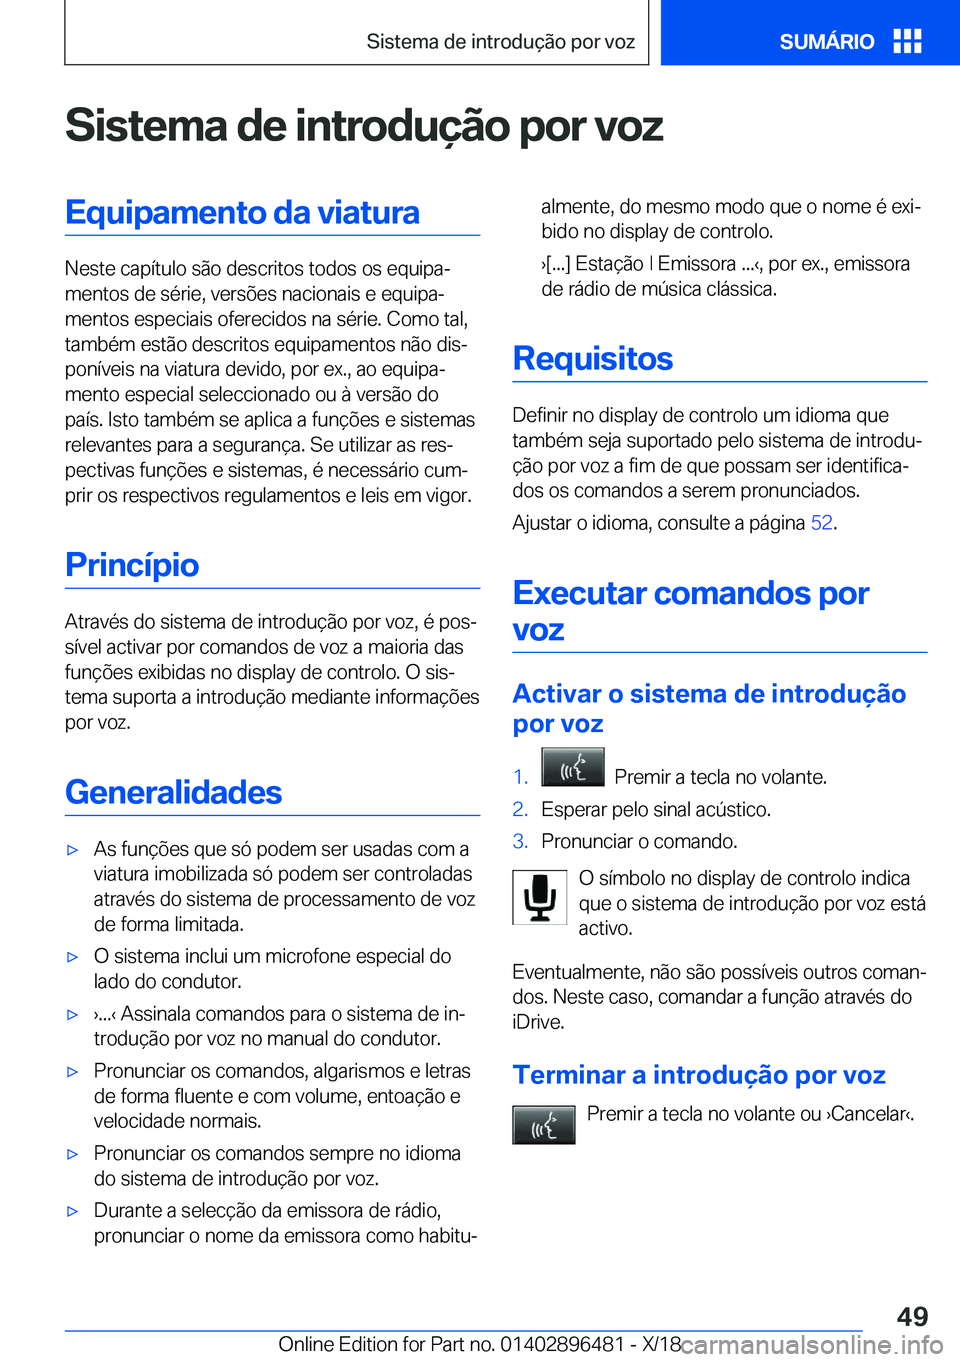 BMW X1 2019  Manual do condutor (in Portuguese) �S�i�s�t�e�m�a��d�e��i�n�t�r�o�d�u�